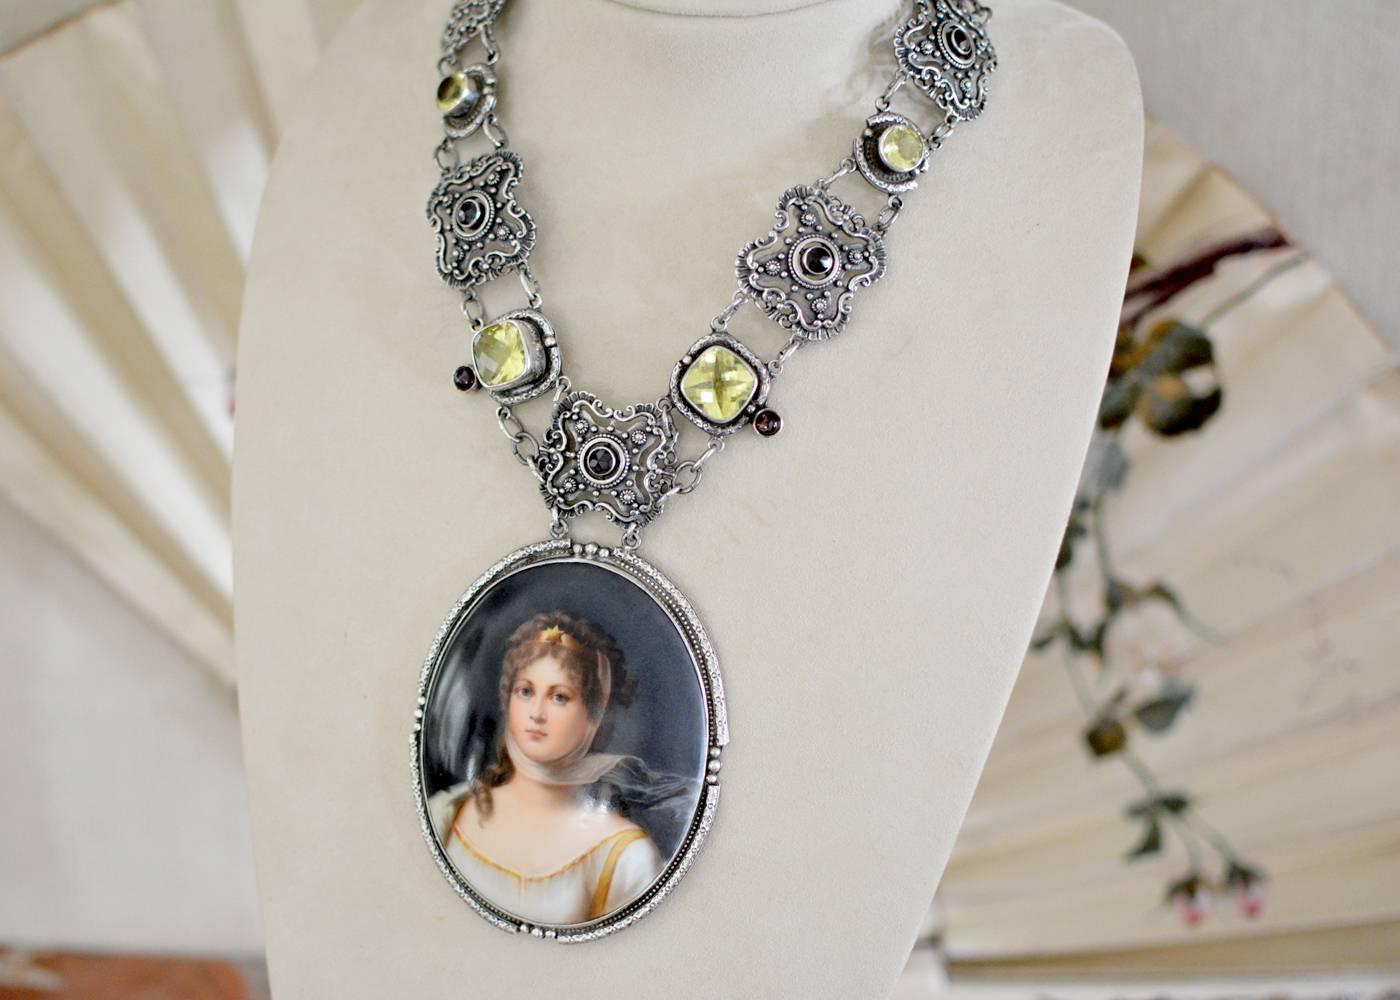 Baroque Jill Garber Nineteenth Century Portrait Necklace with Garnets and Lemon Quartz For Sale